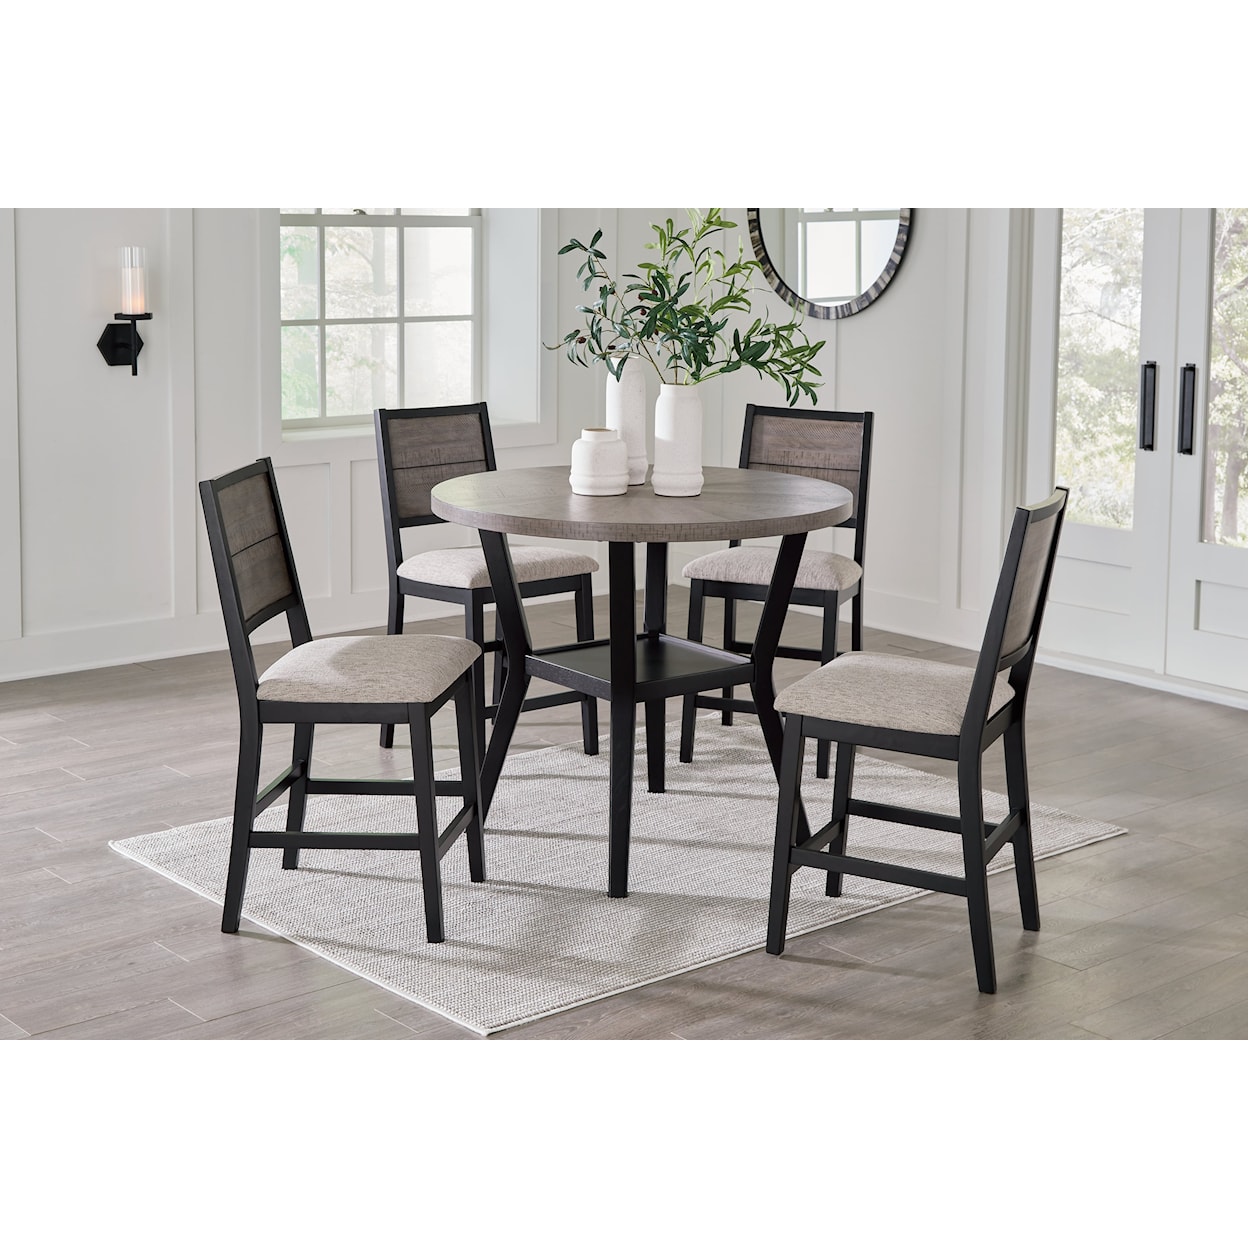 Ashley Furniture Signature Design Corloda Round Counter Table Set